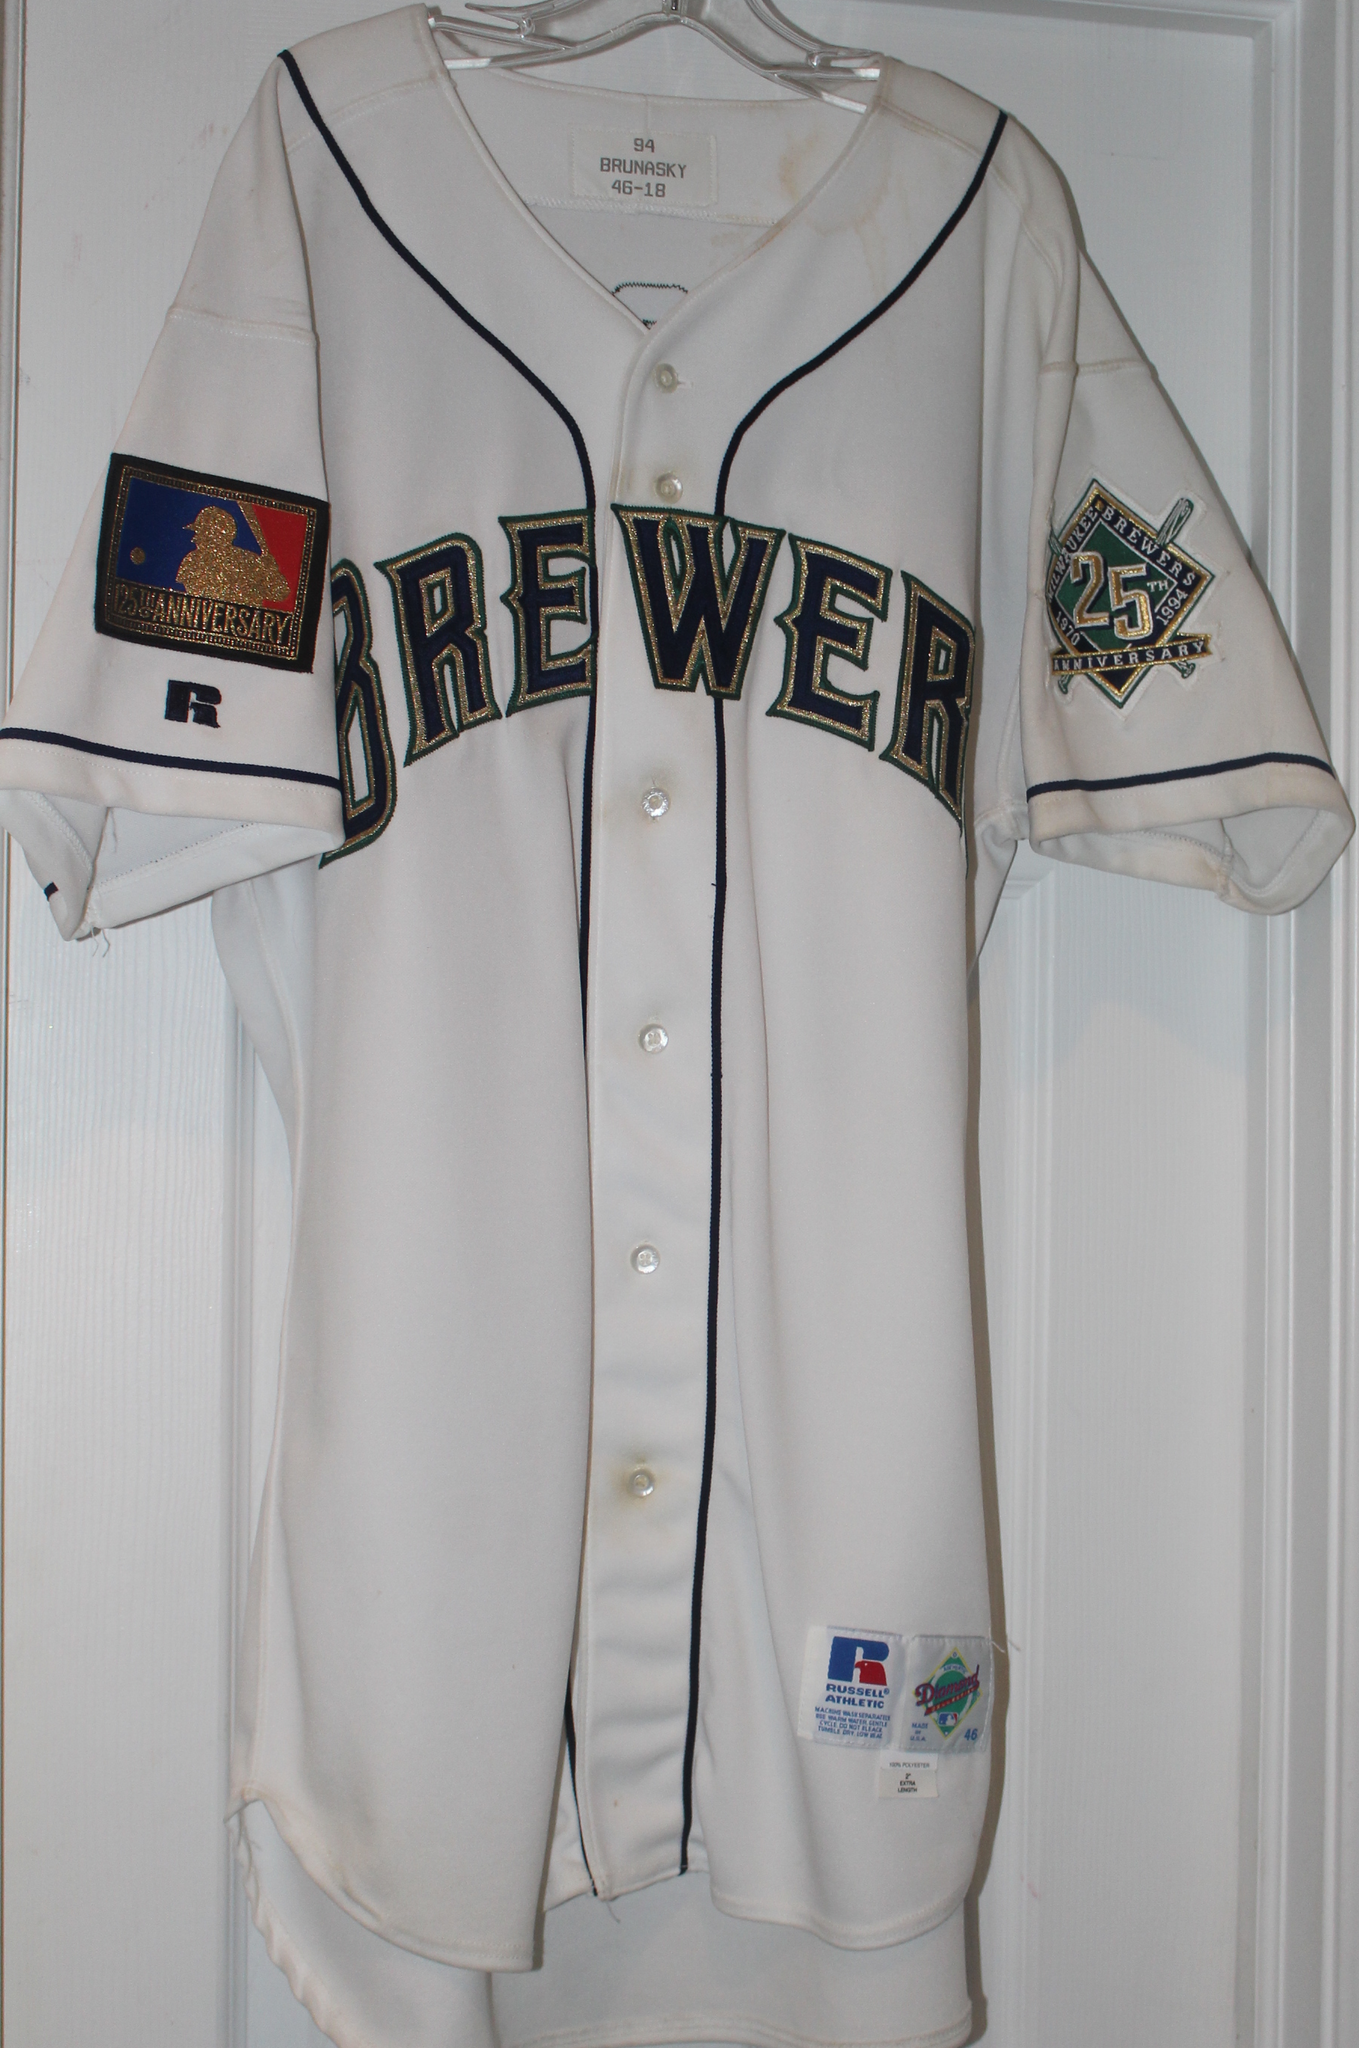 1994 Tom Brunasky Milwaukee Brewers Game Used Baseball Jersey, 2 Anniv